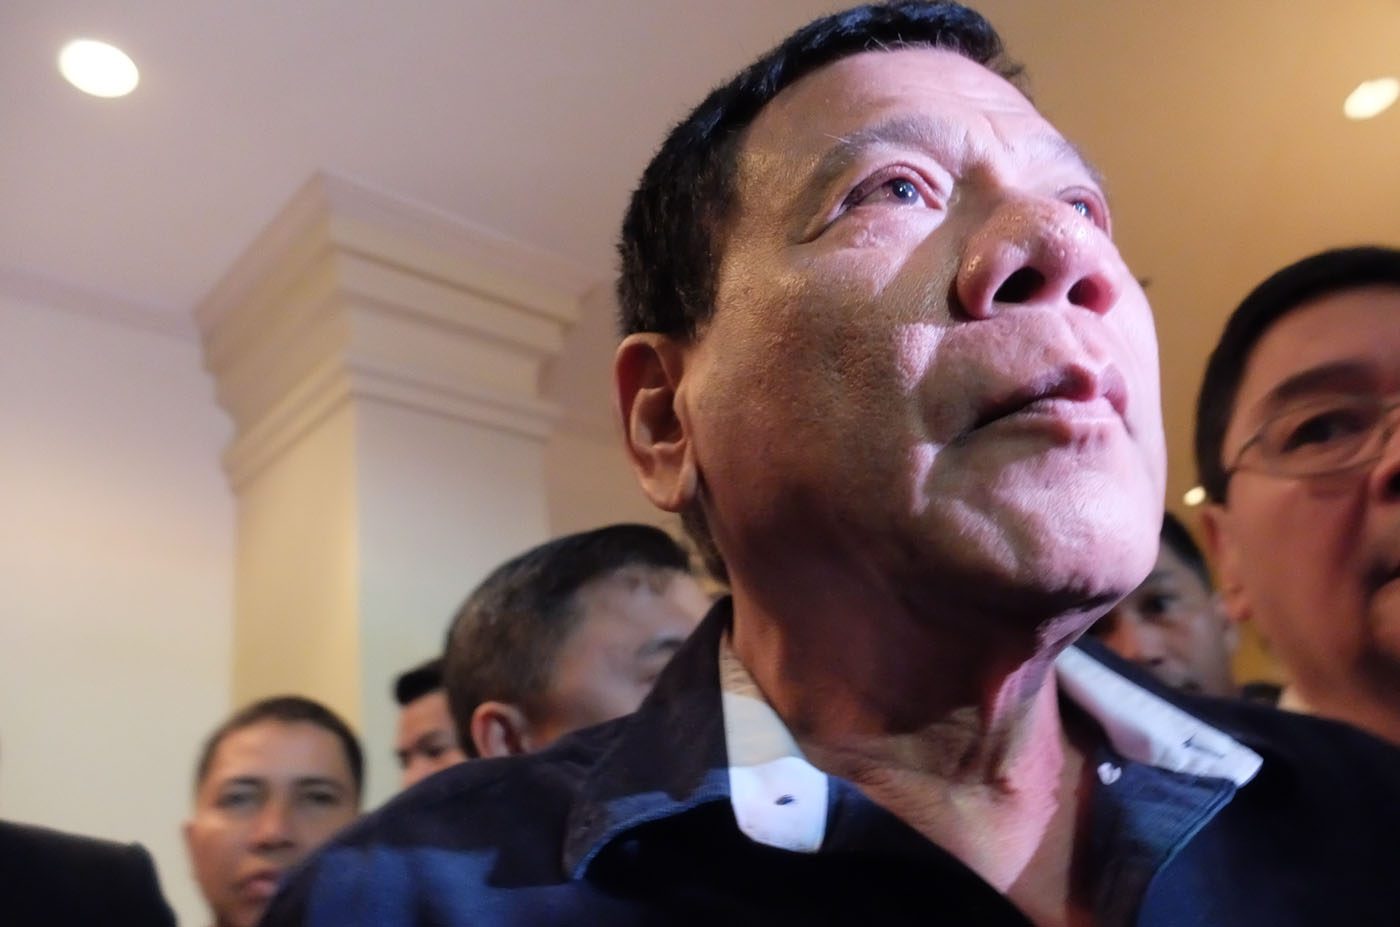 Duterte to ‘unimpressed’ businessmen: I will hire economic minds